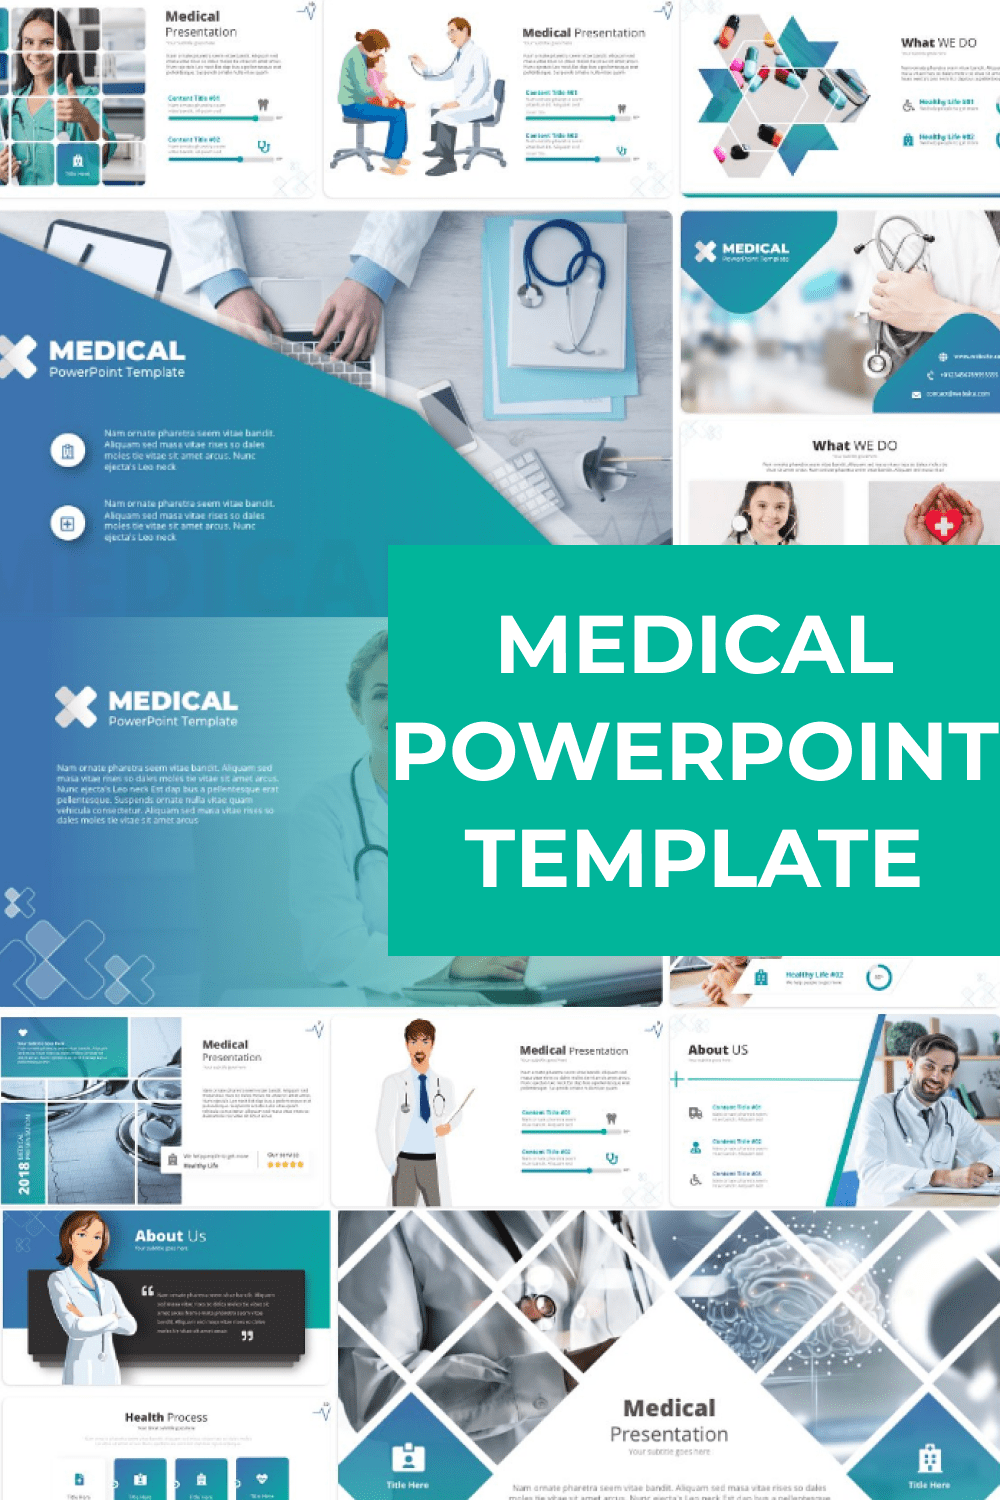 Medical Powerpoint Template Pinterest.